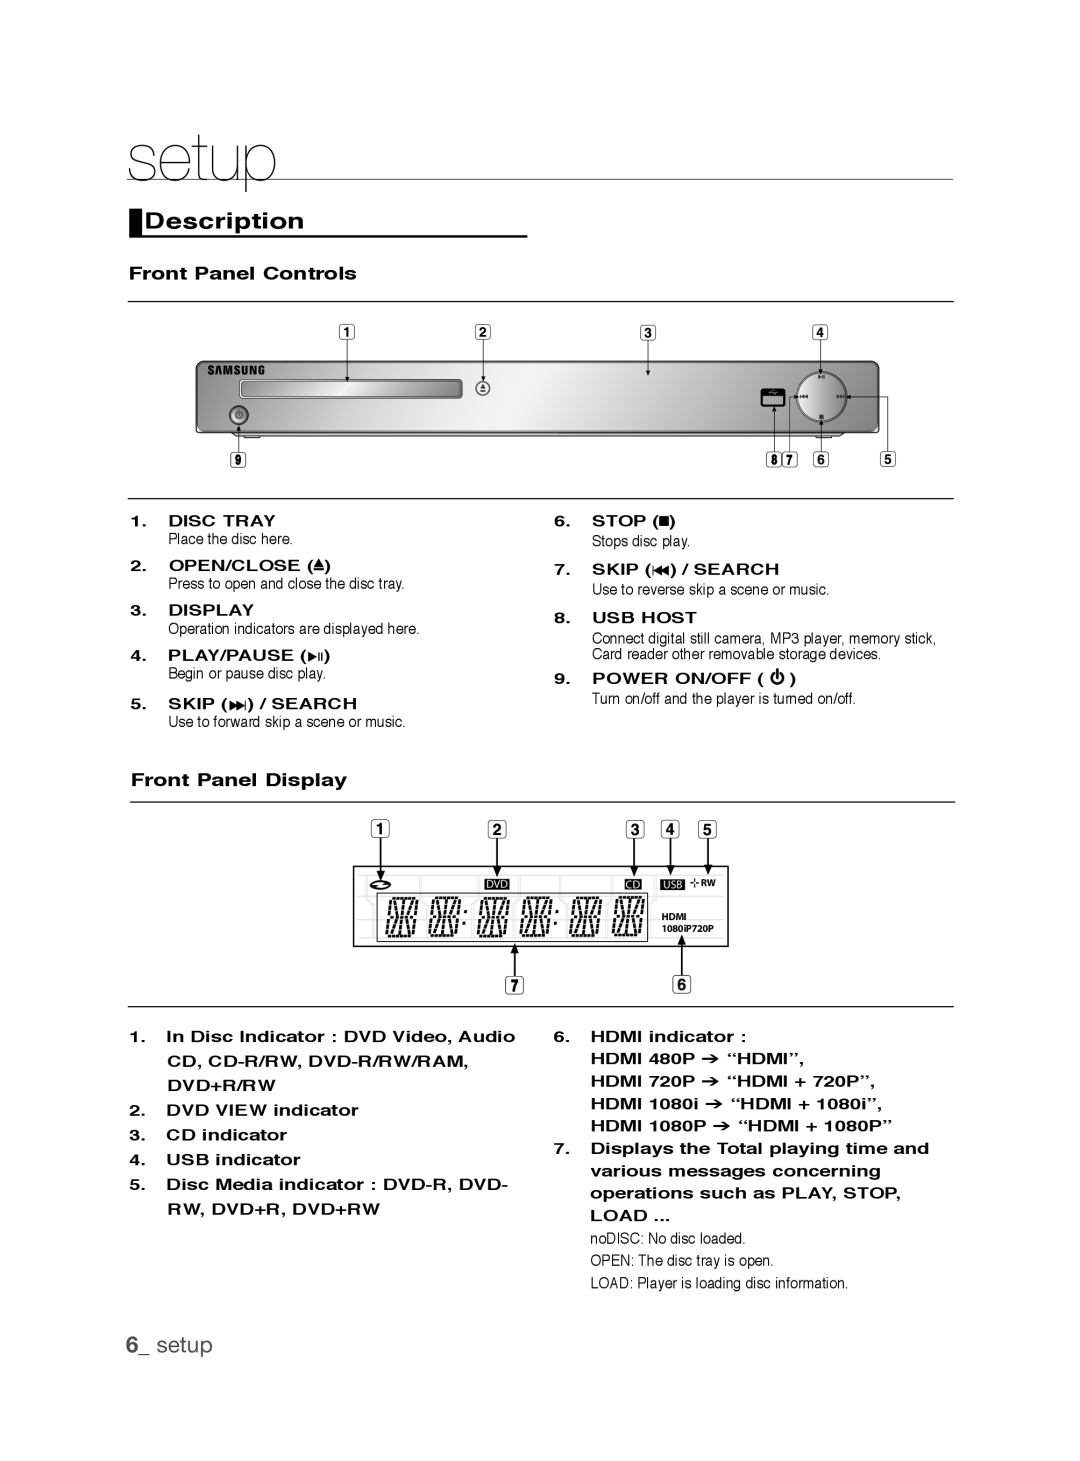 Samsung DVD-1080P9/SAH manual Description, setup, Front Panel Controls, Front Panel Display, Skip / Search, Usb Host 